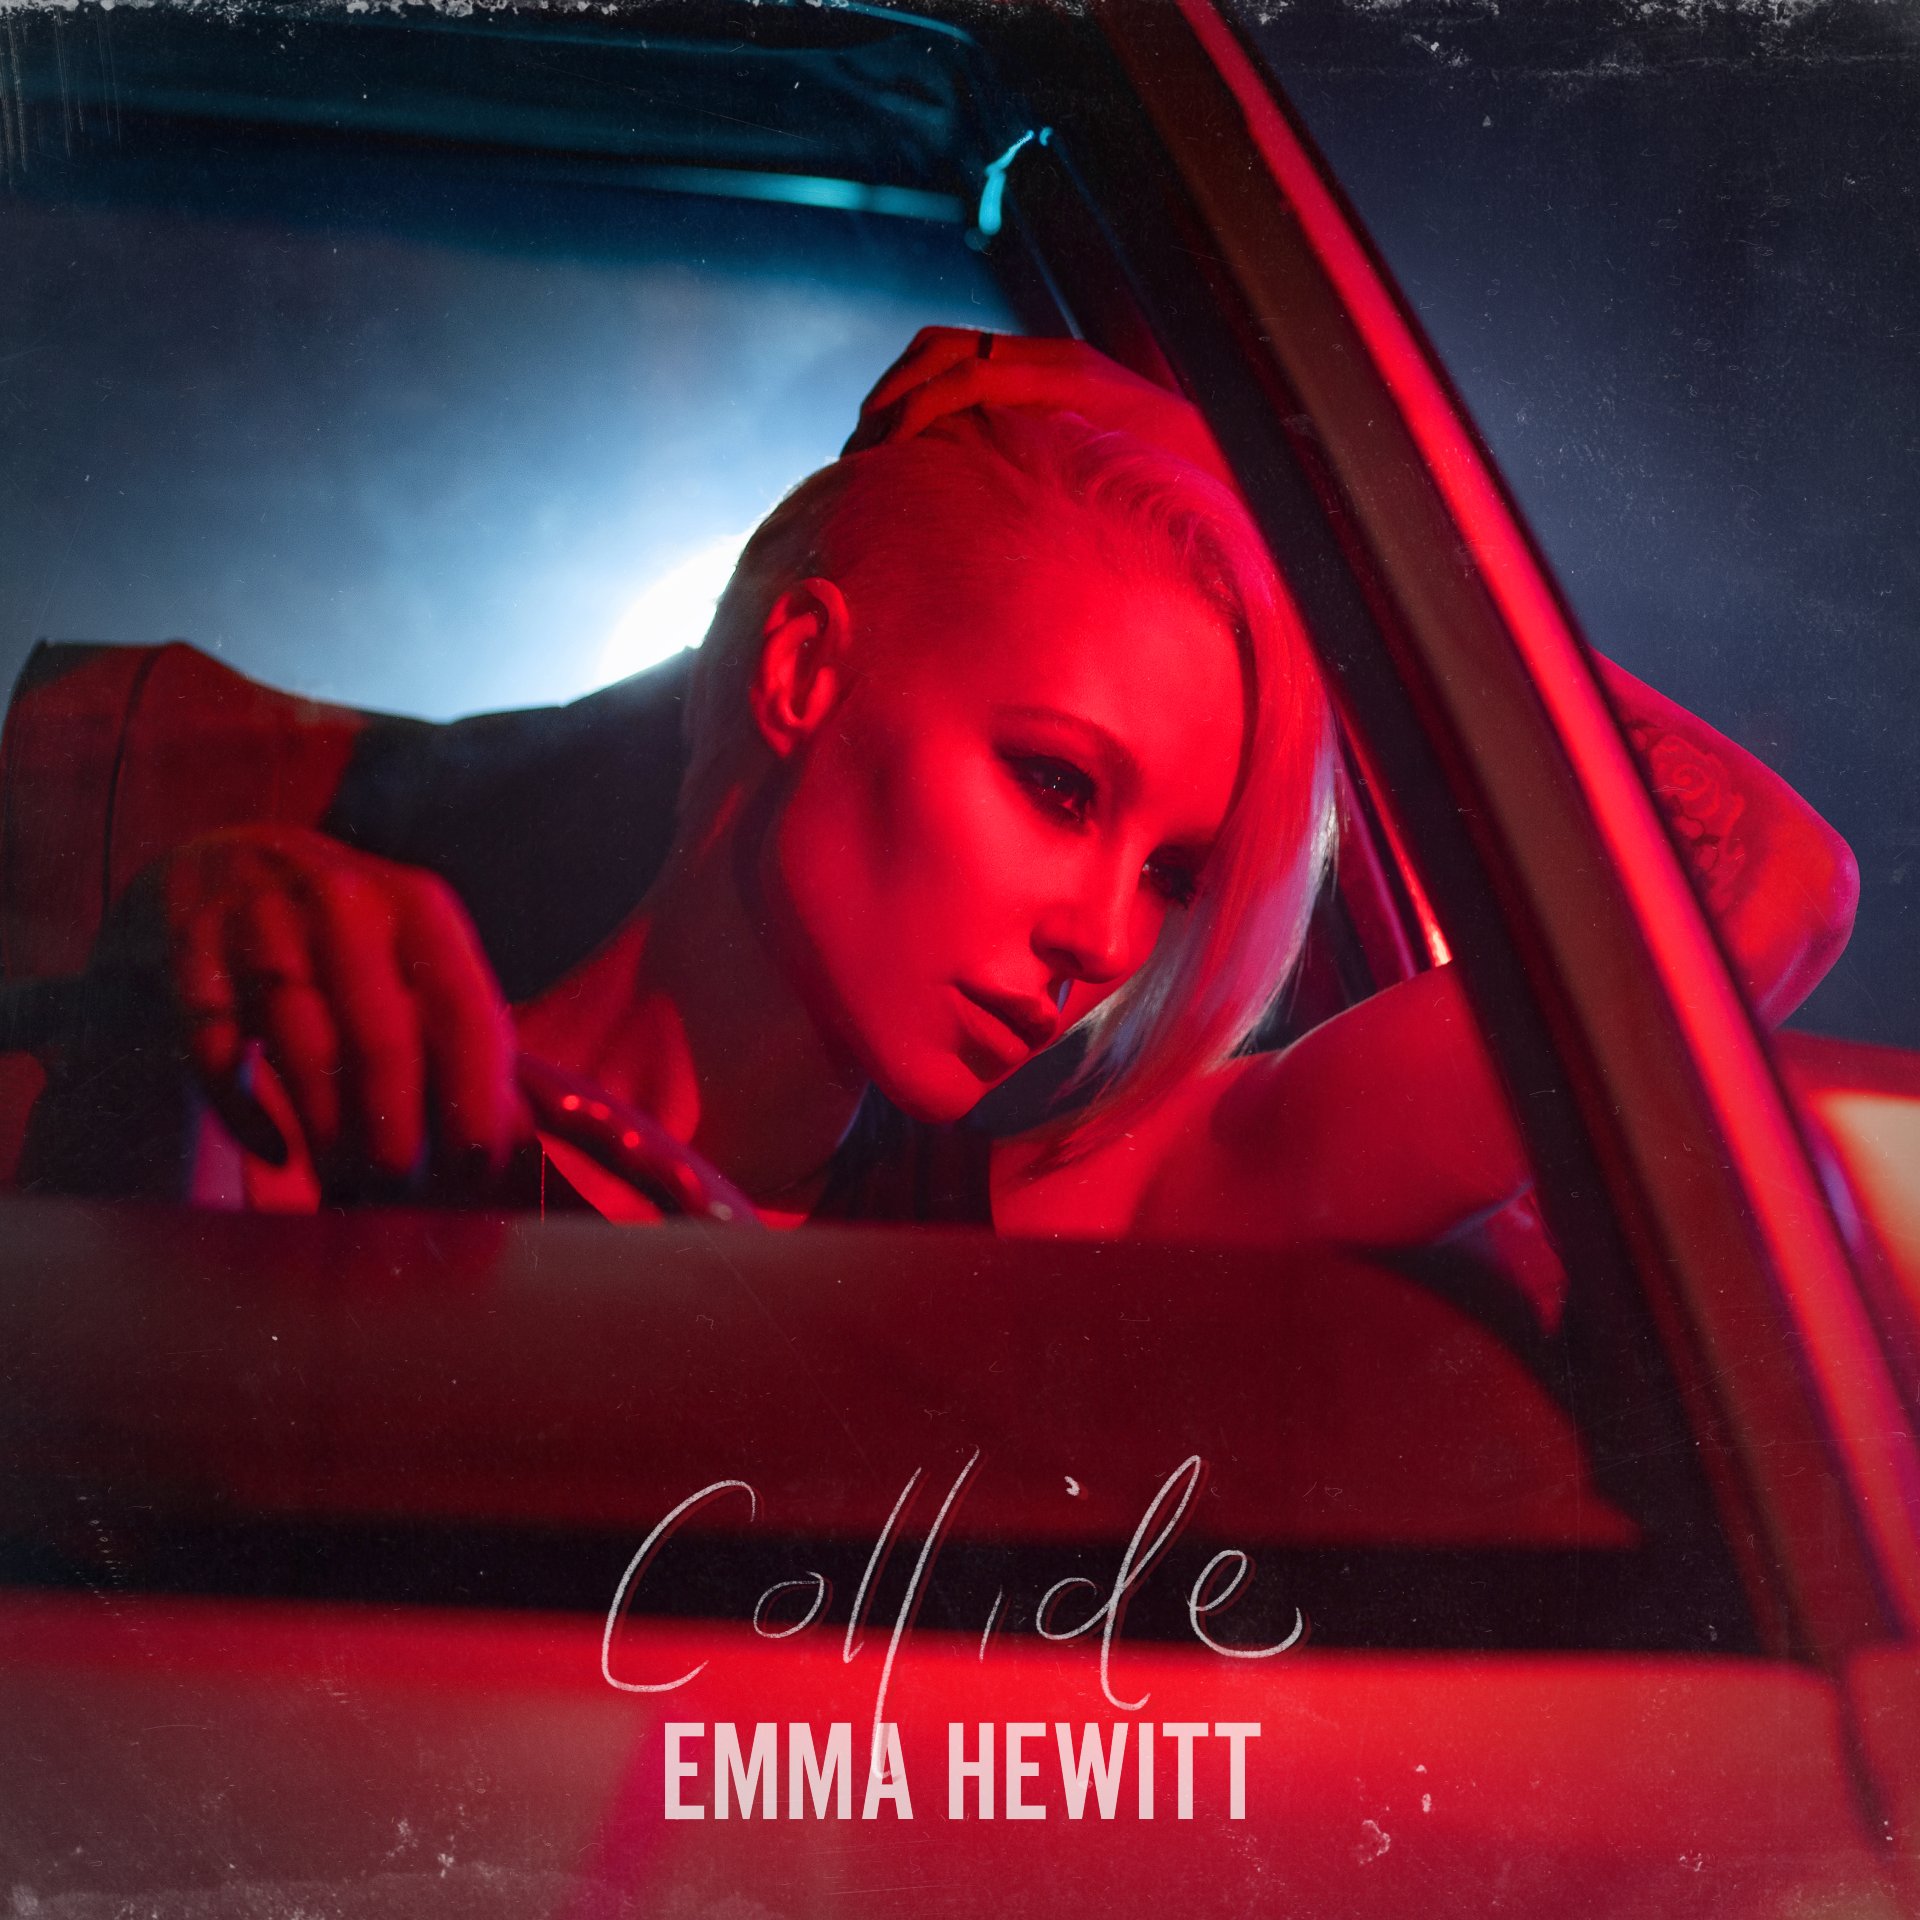 Emma Hewitt x Ben Nicky presents Collide on Black Hole Recordings